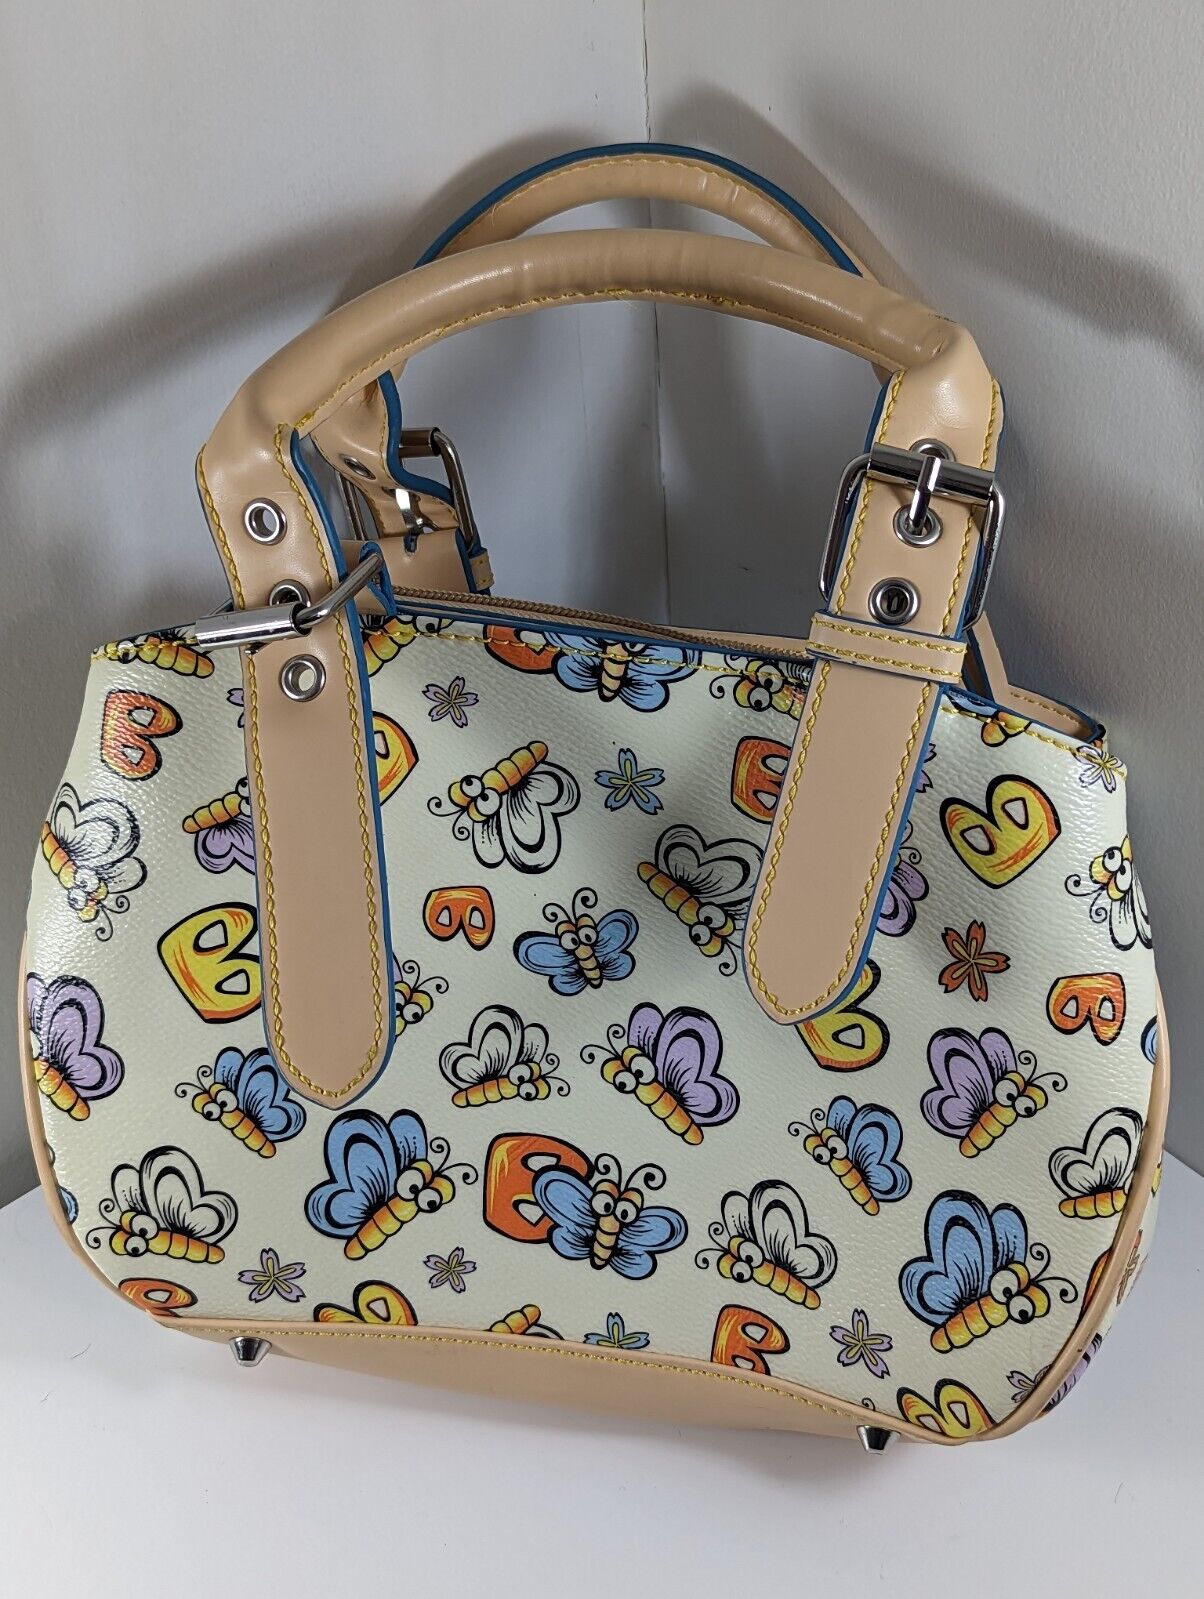 B's Butterfly Dooney & Bourke Disney Style Tote White + Tan multicolor purse bag